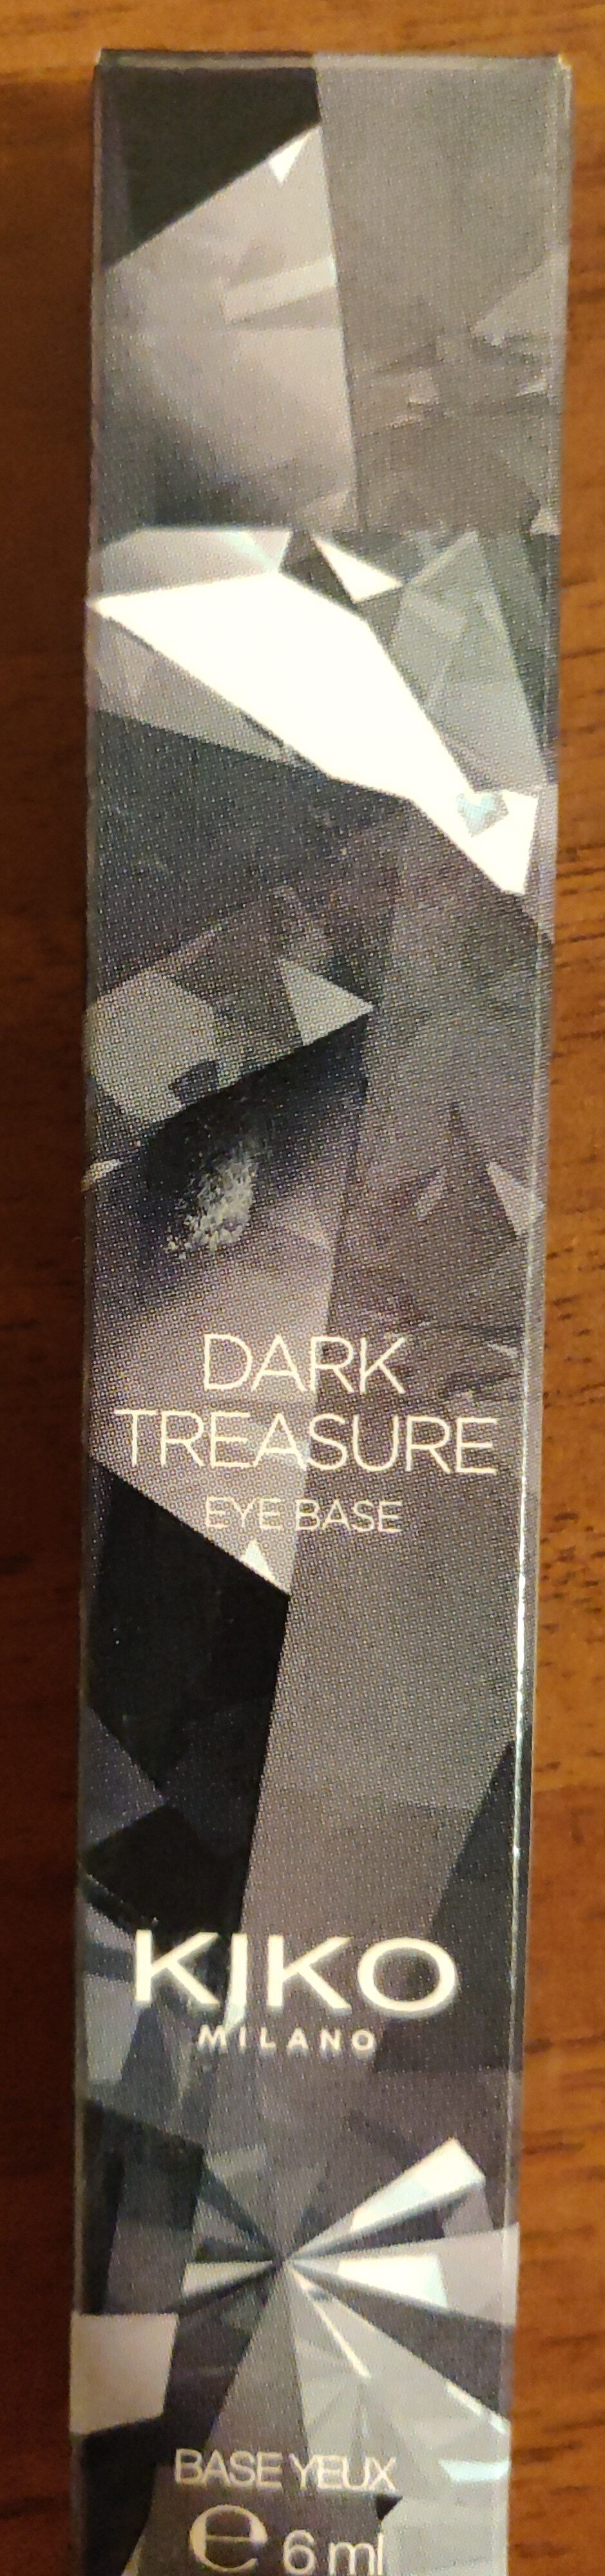 Dark treasure eye base - Product - it